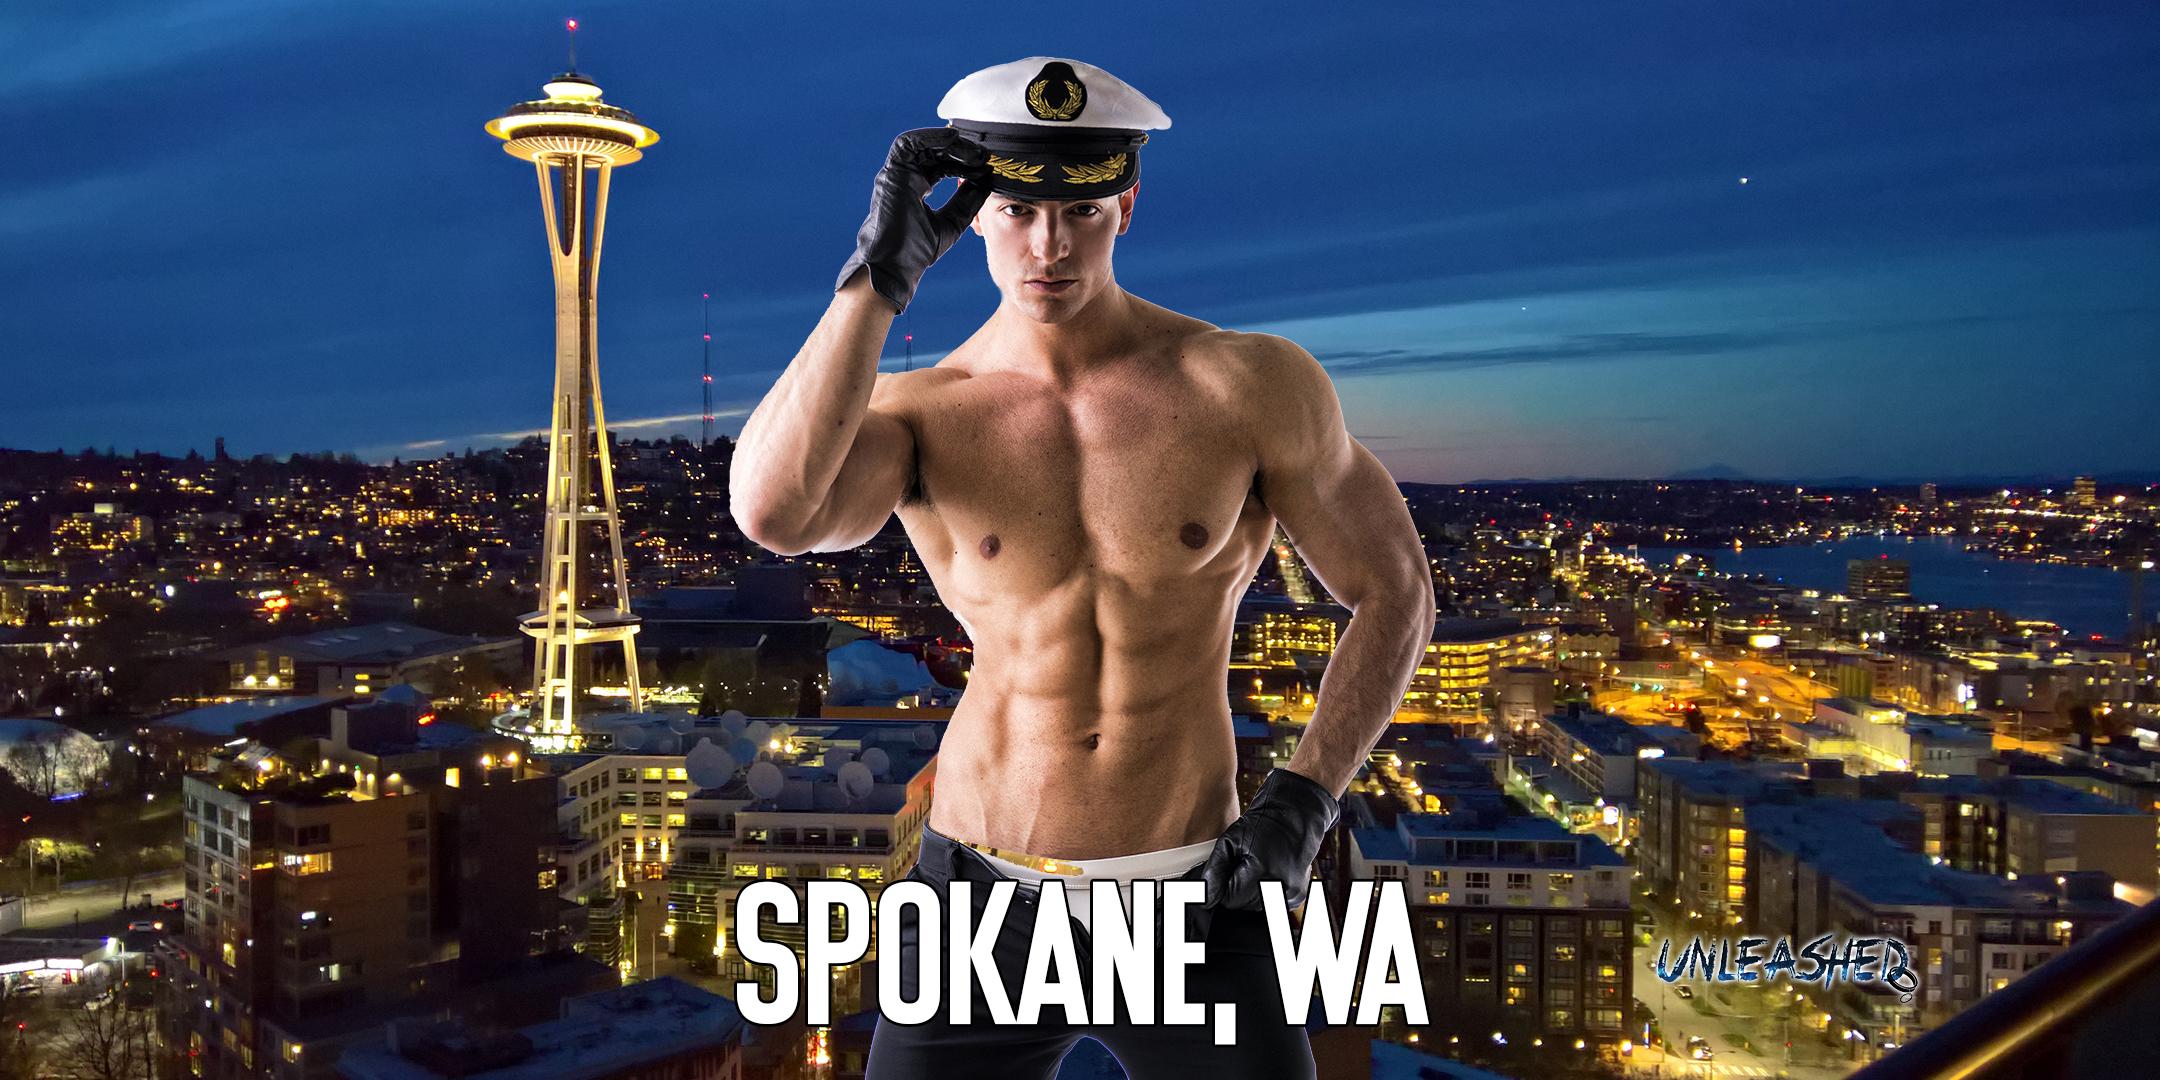 Male Strippers UNLEASHED Male Revue Seattle, WA 8-10 PM